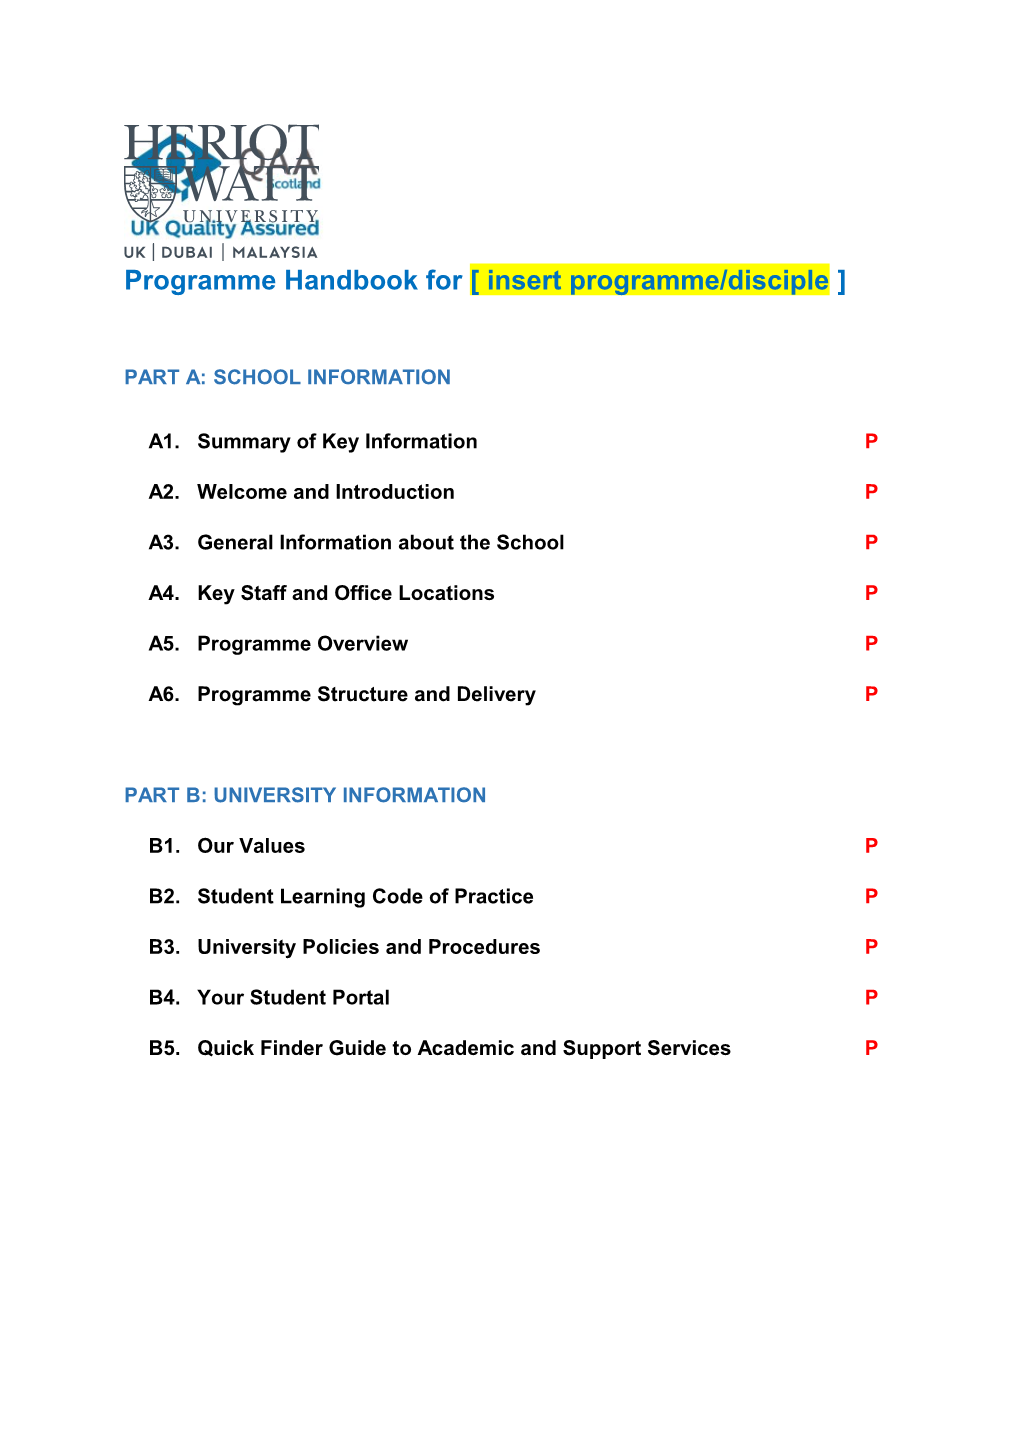 Programme Handbook for Insert Programme/Disciple